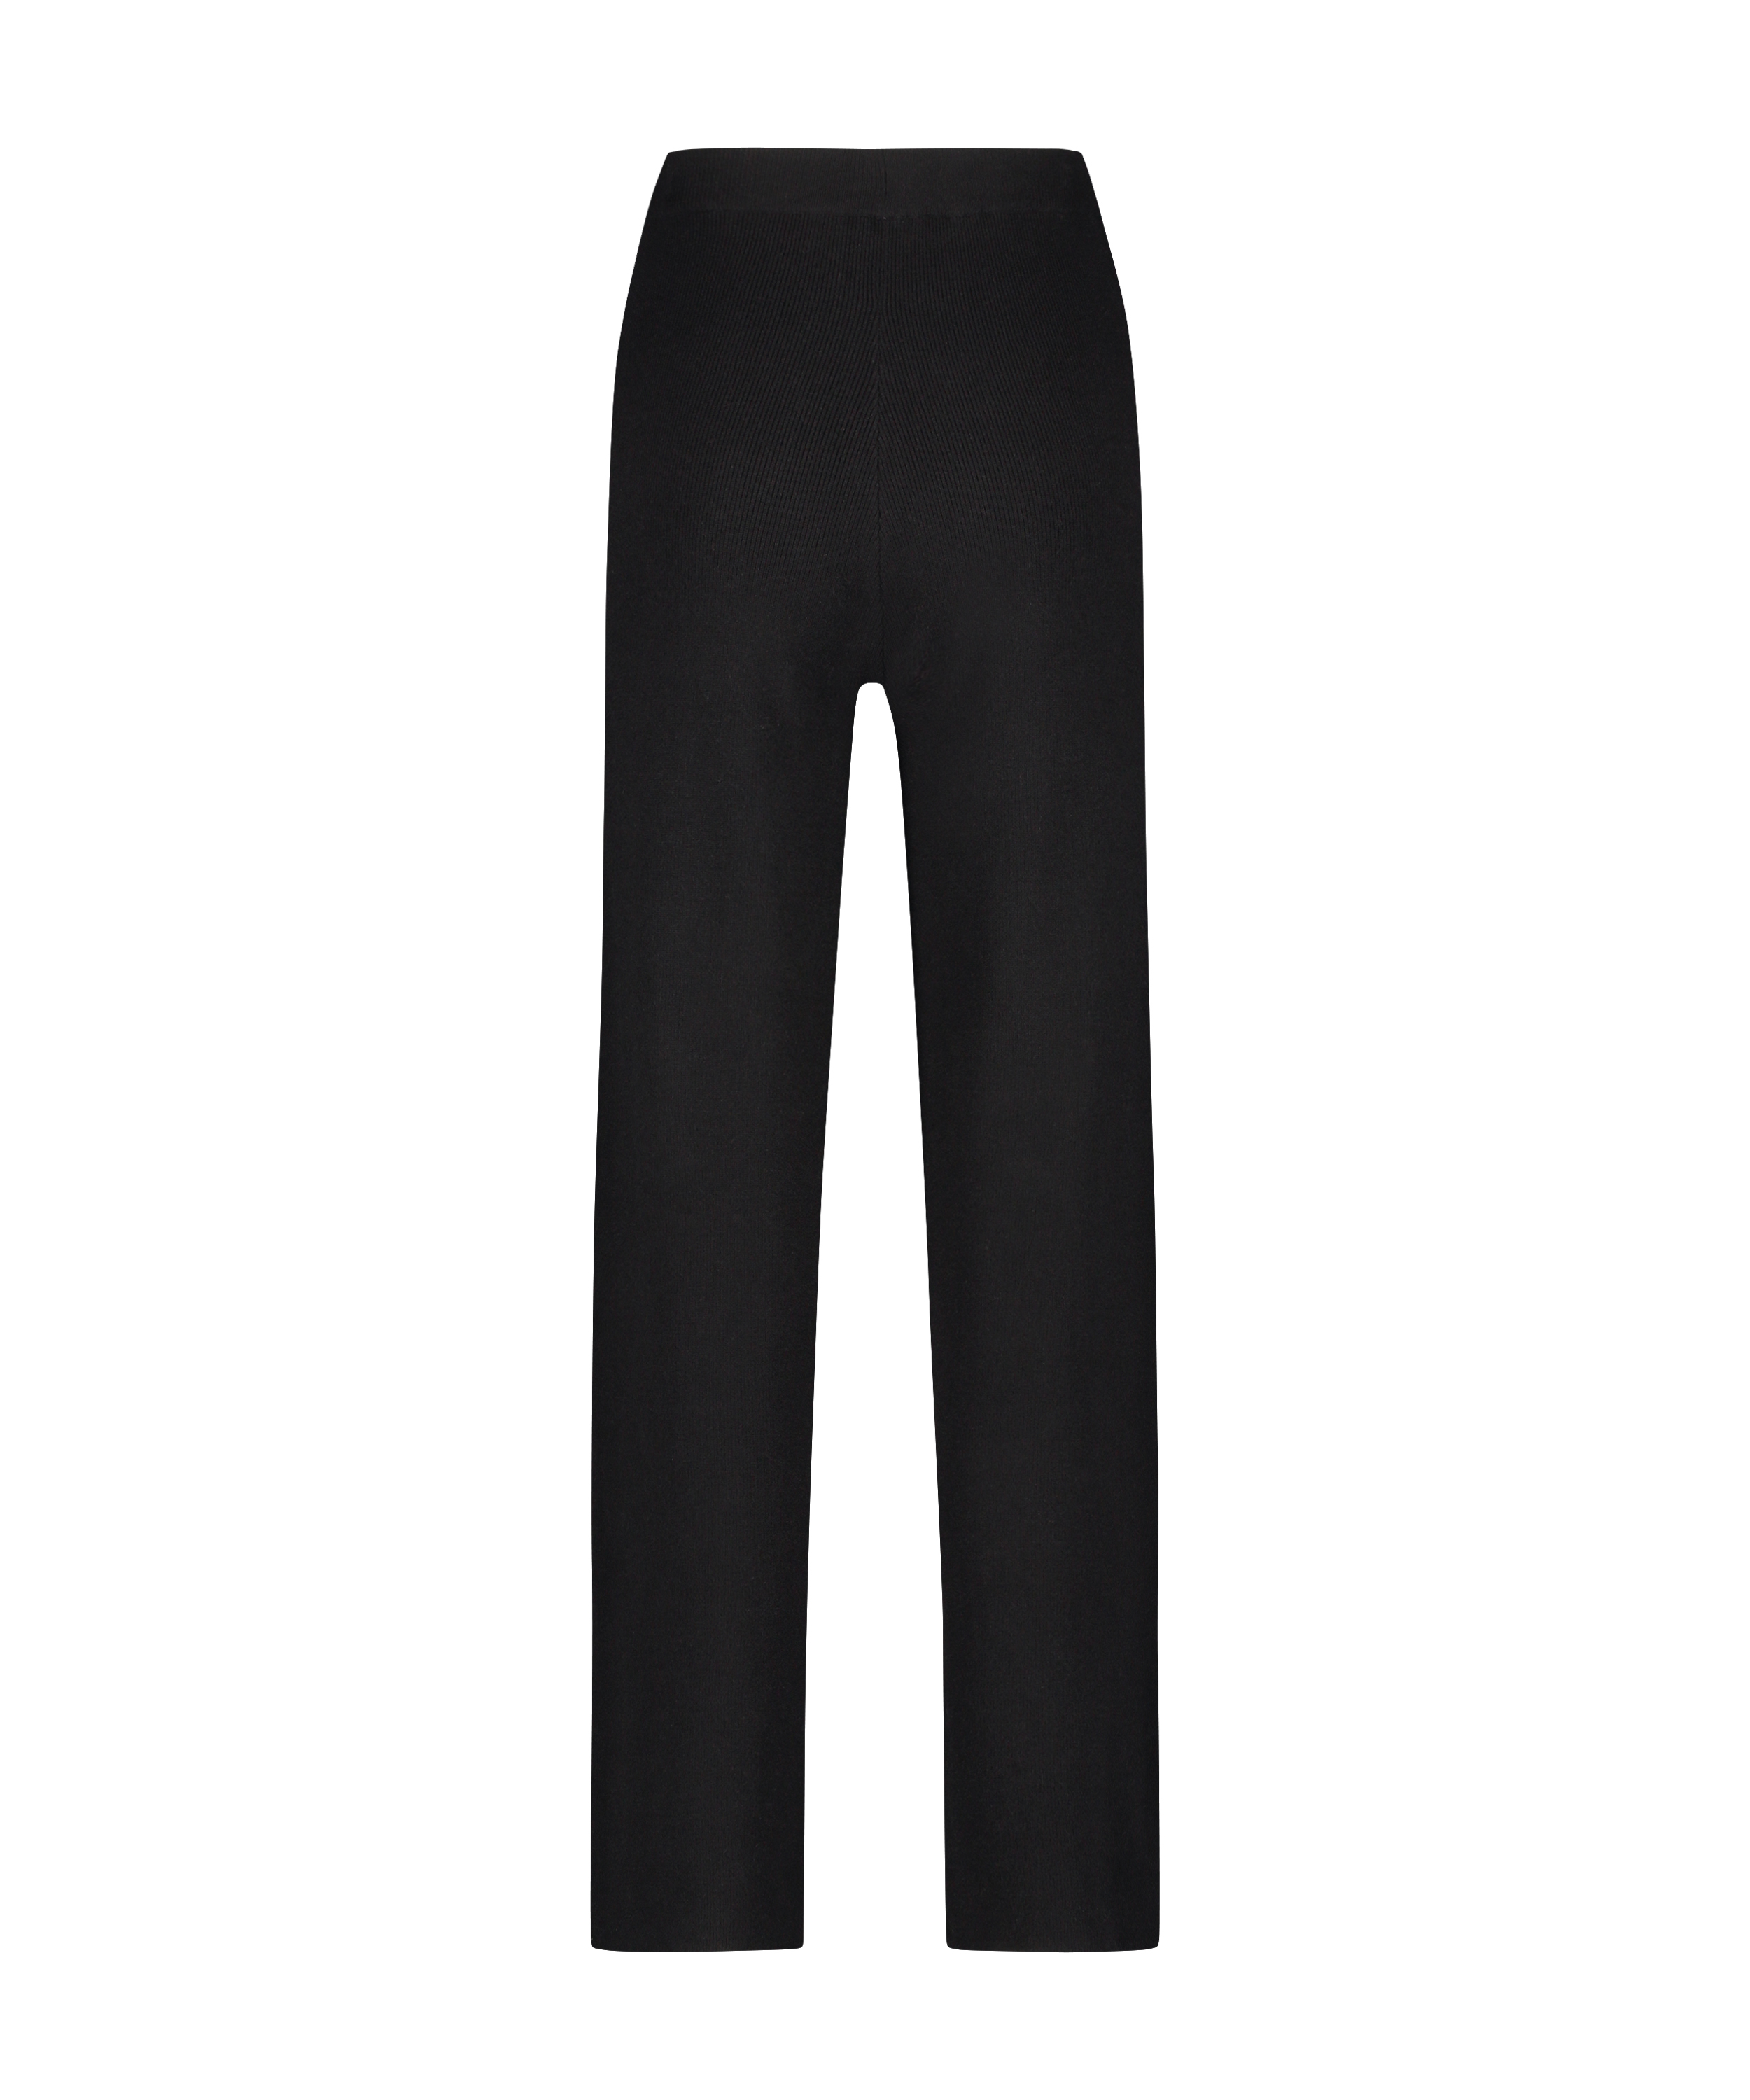 Premium Pantalons Longs Knit, Noir, main